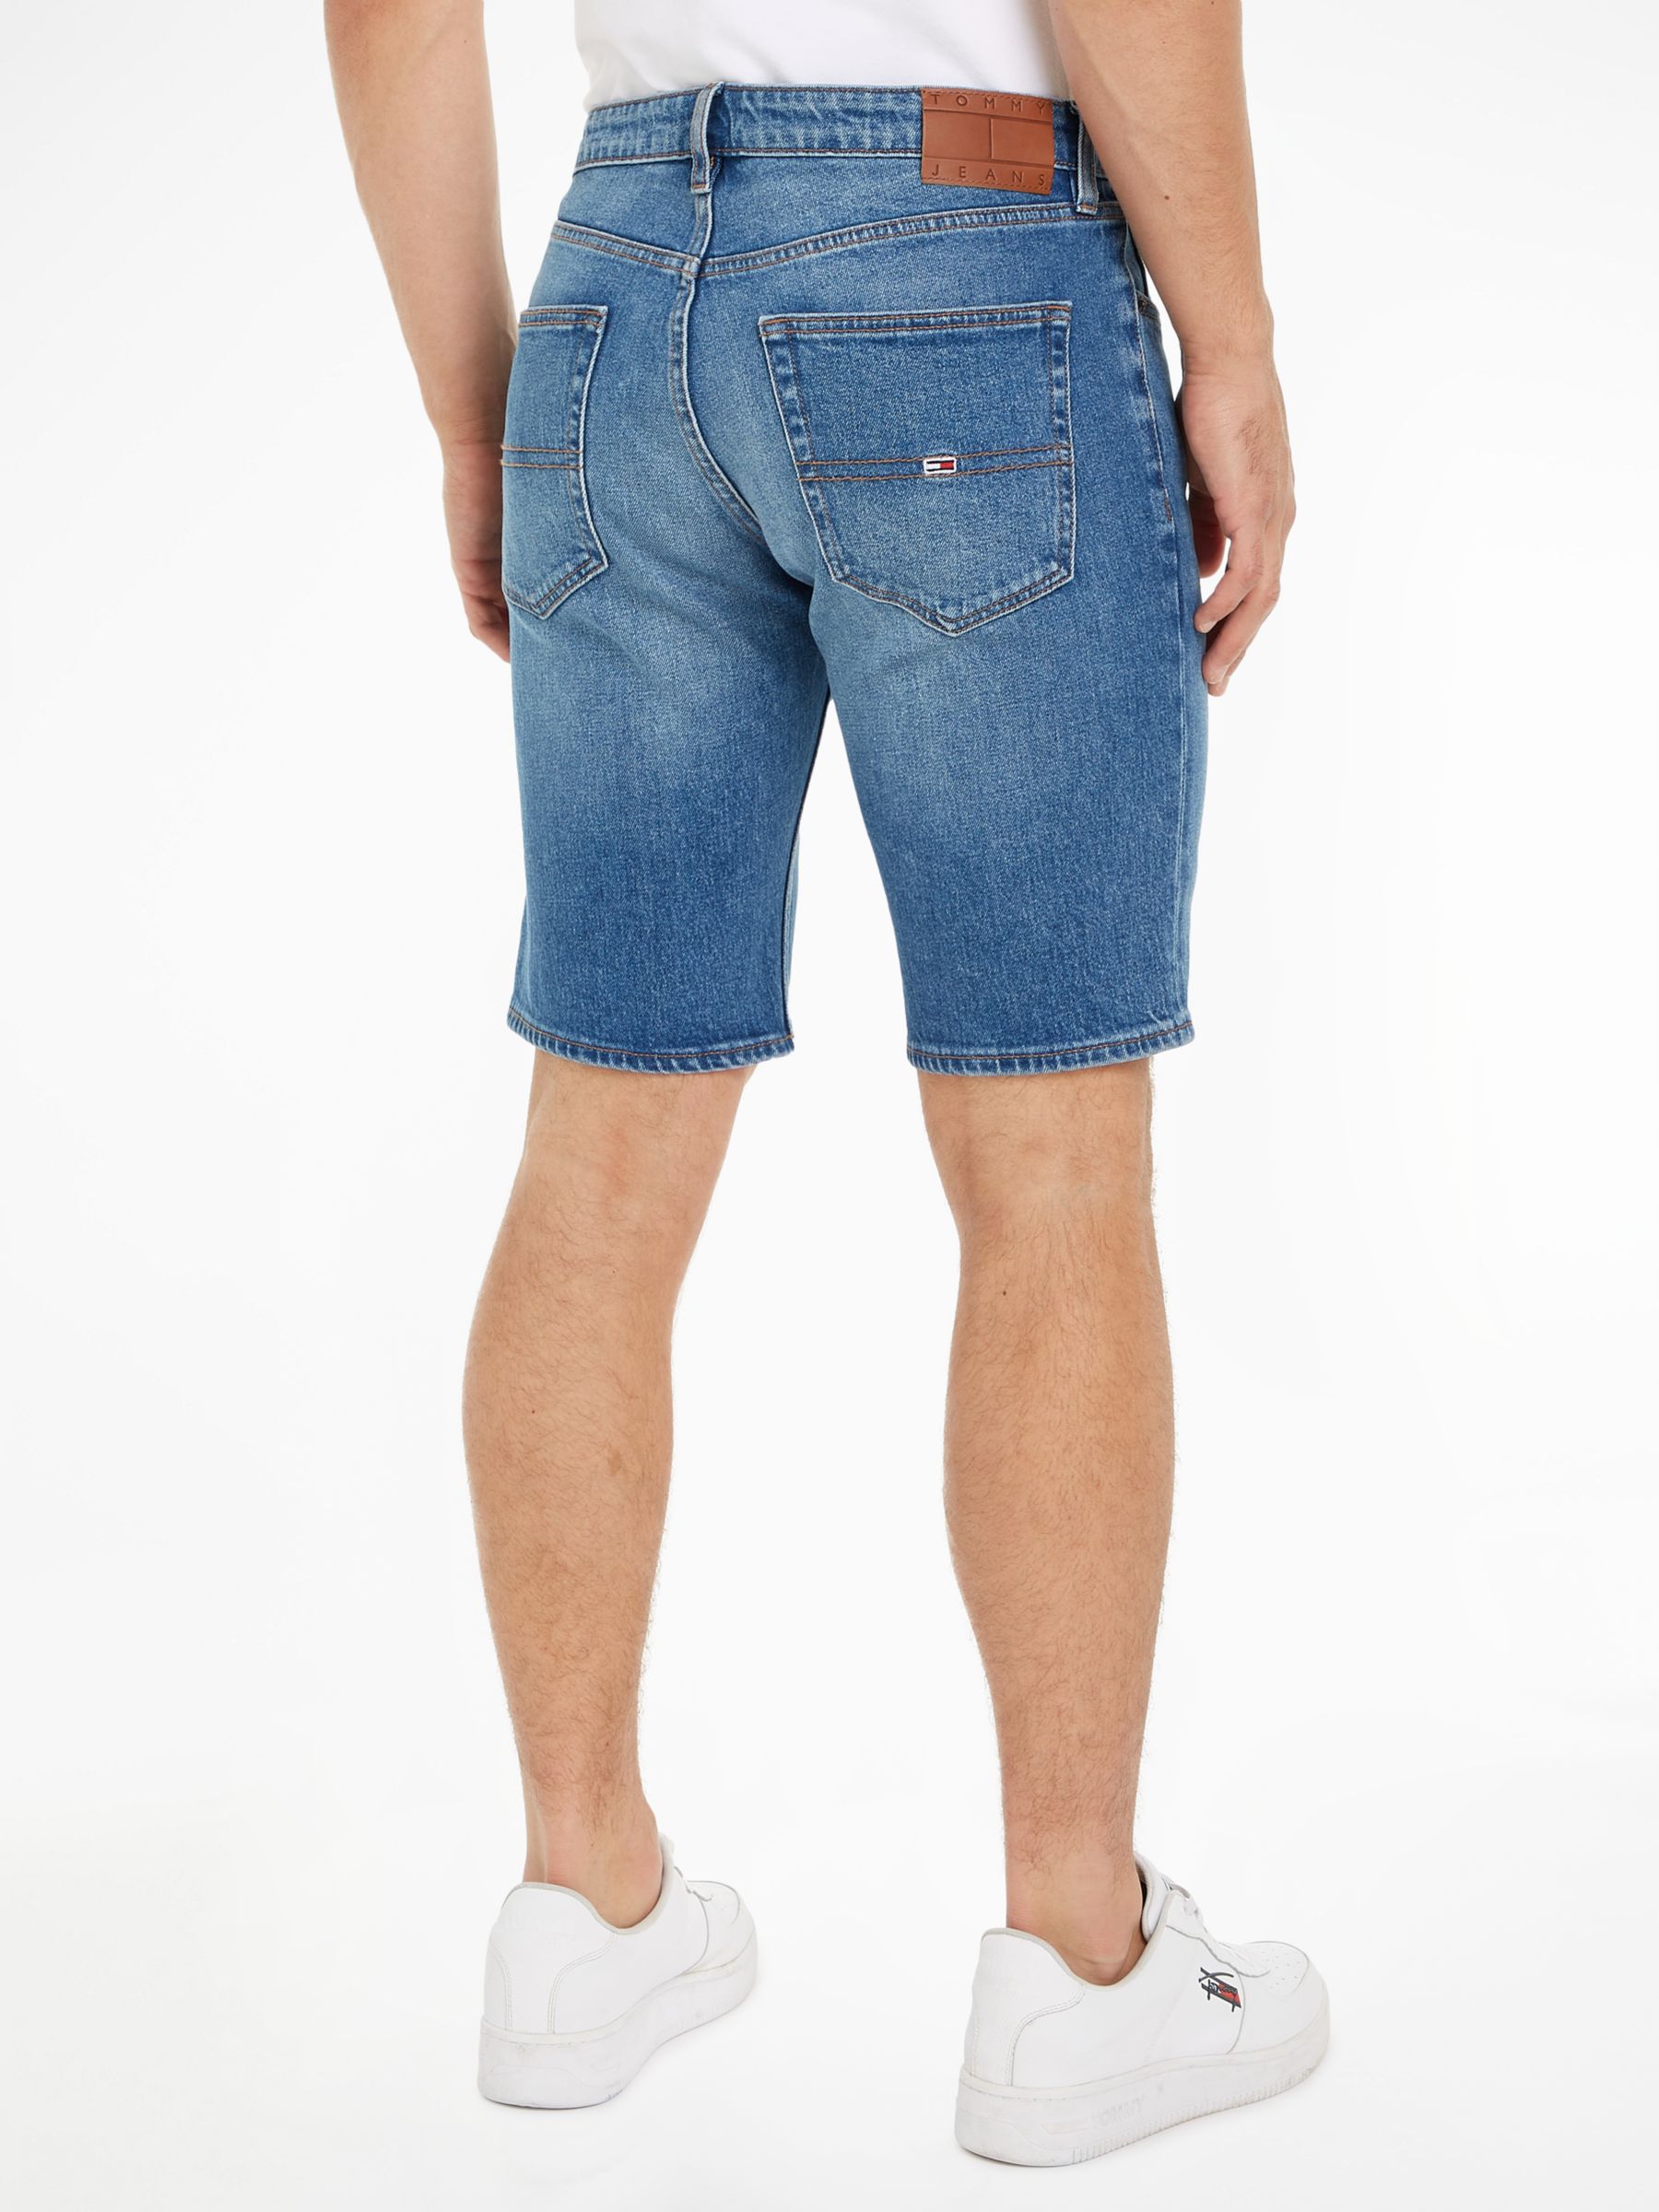 Tommy Jeans Scanton Denim Shorts, Medium Blue, 30R